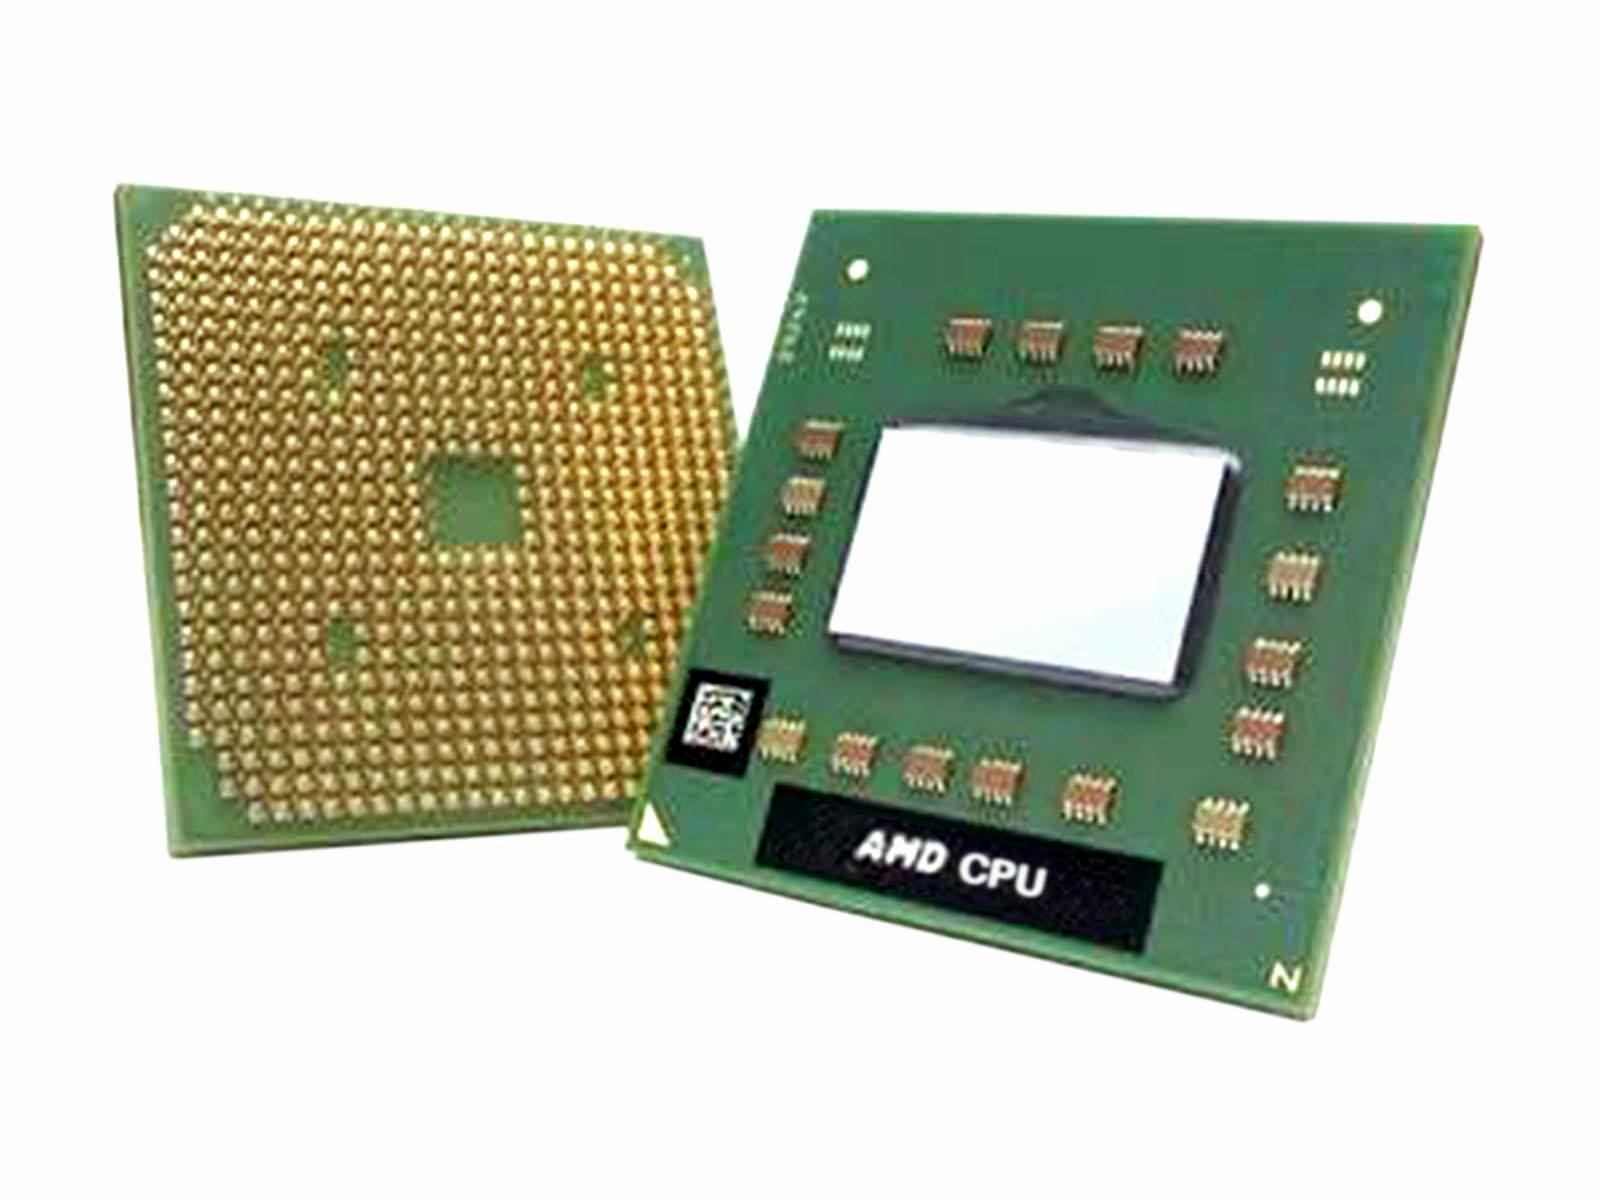 AMD ZM-84 CPU